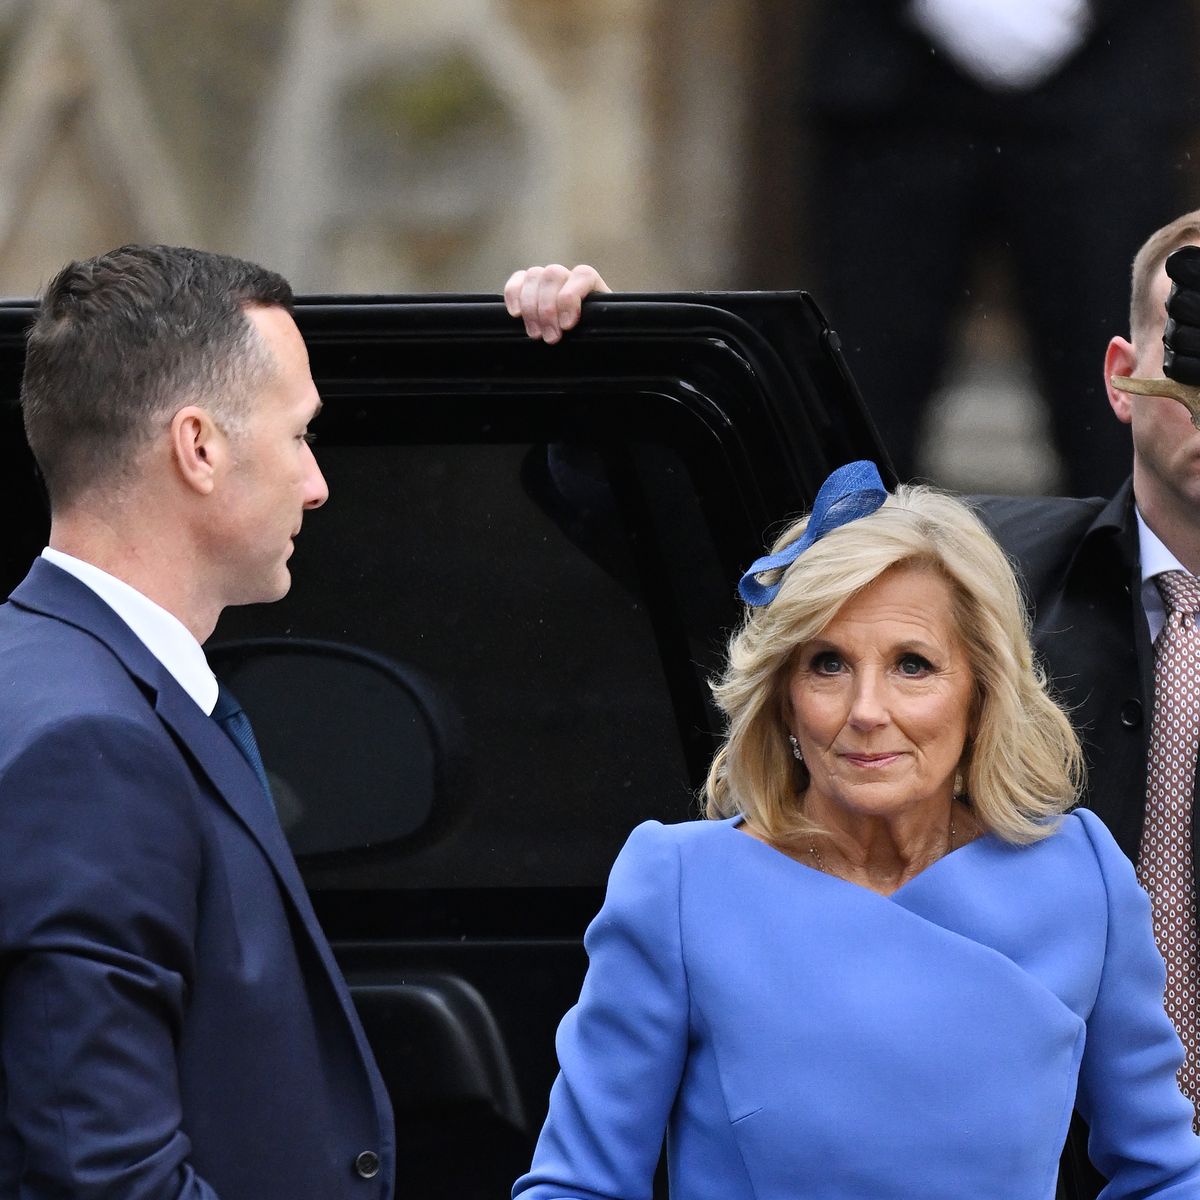 Jill Biden looks radiant in blue as she arrives at the coronation